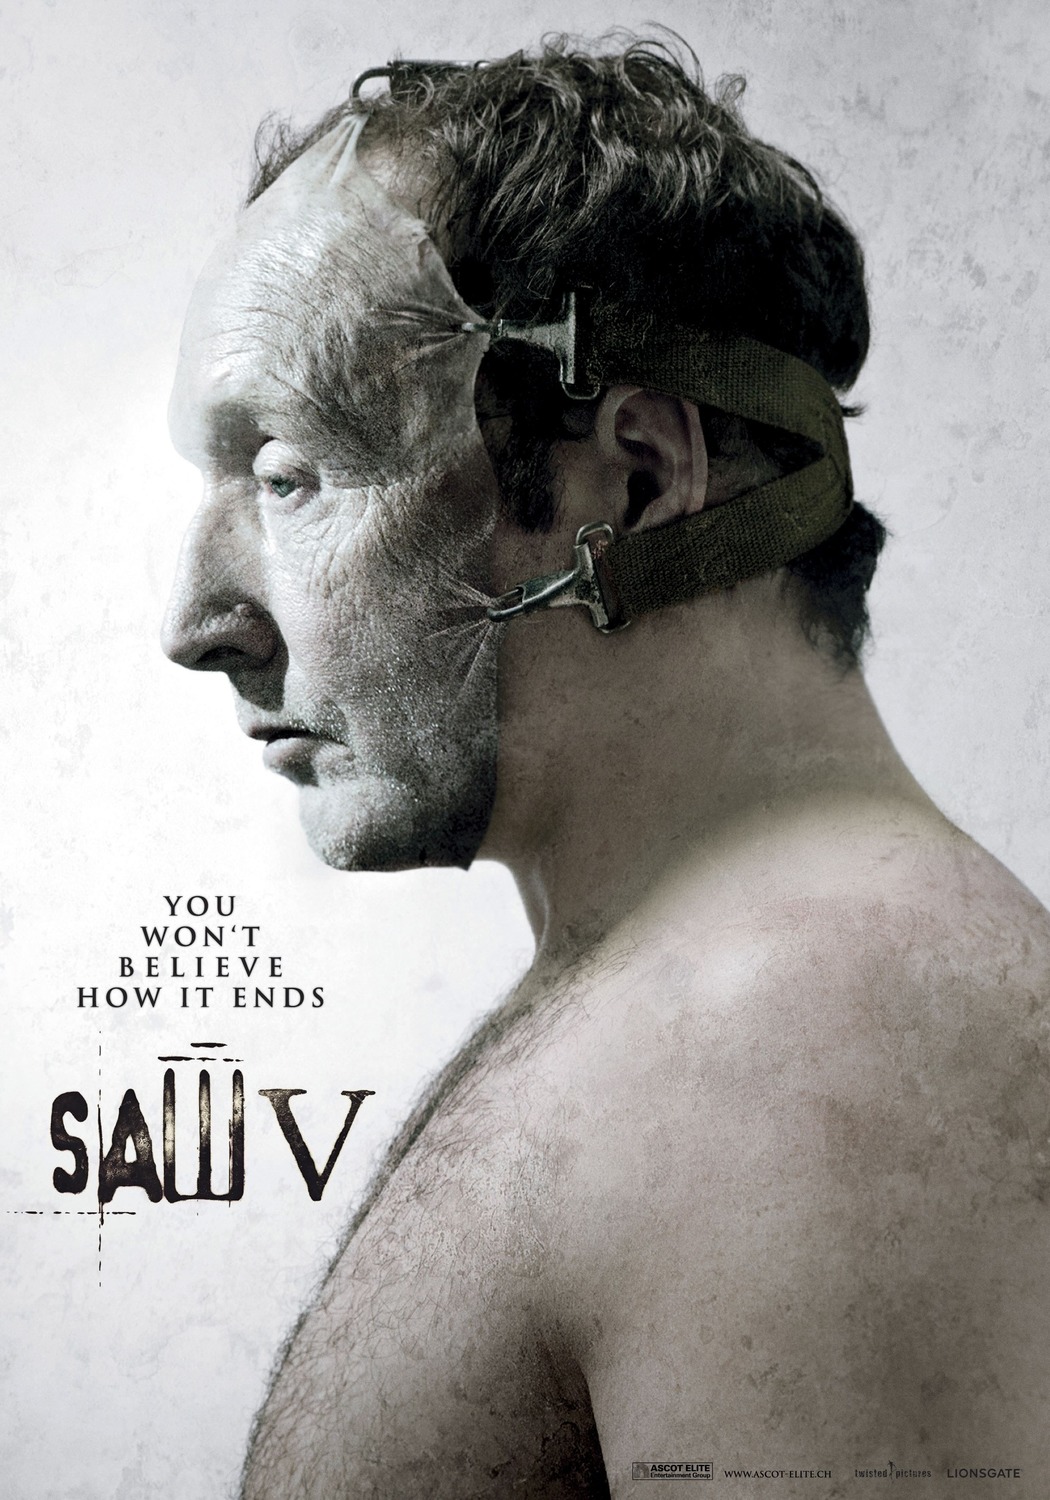 Saw X Movie Poster (#5 of 9) - IMP Awards